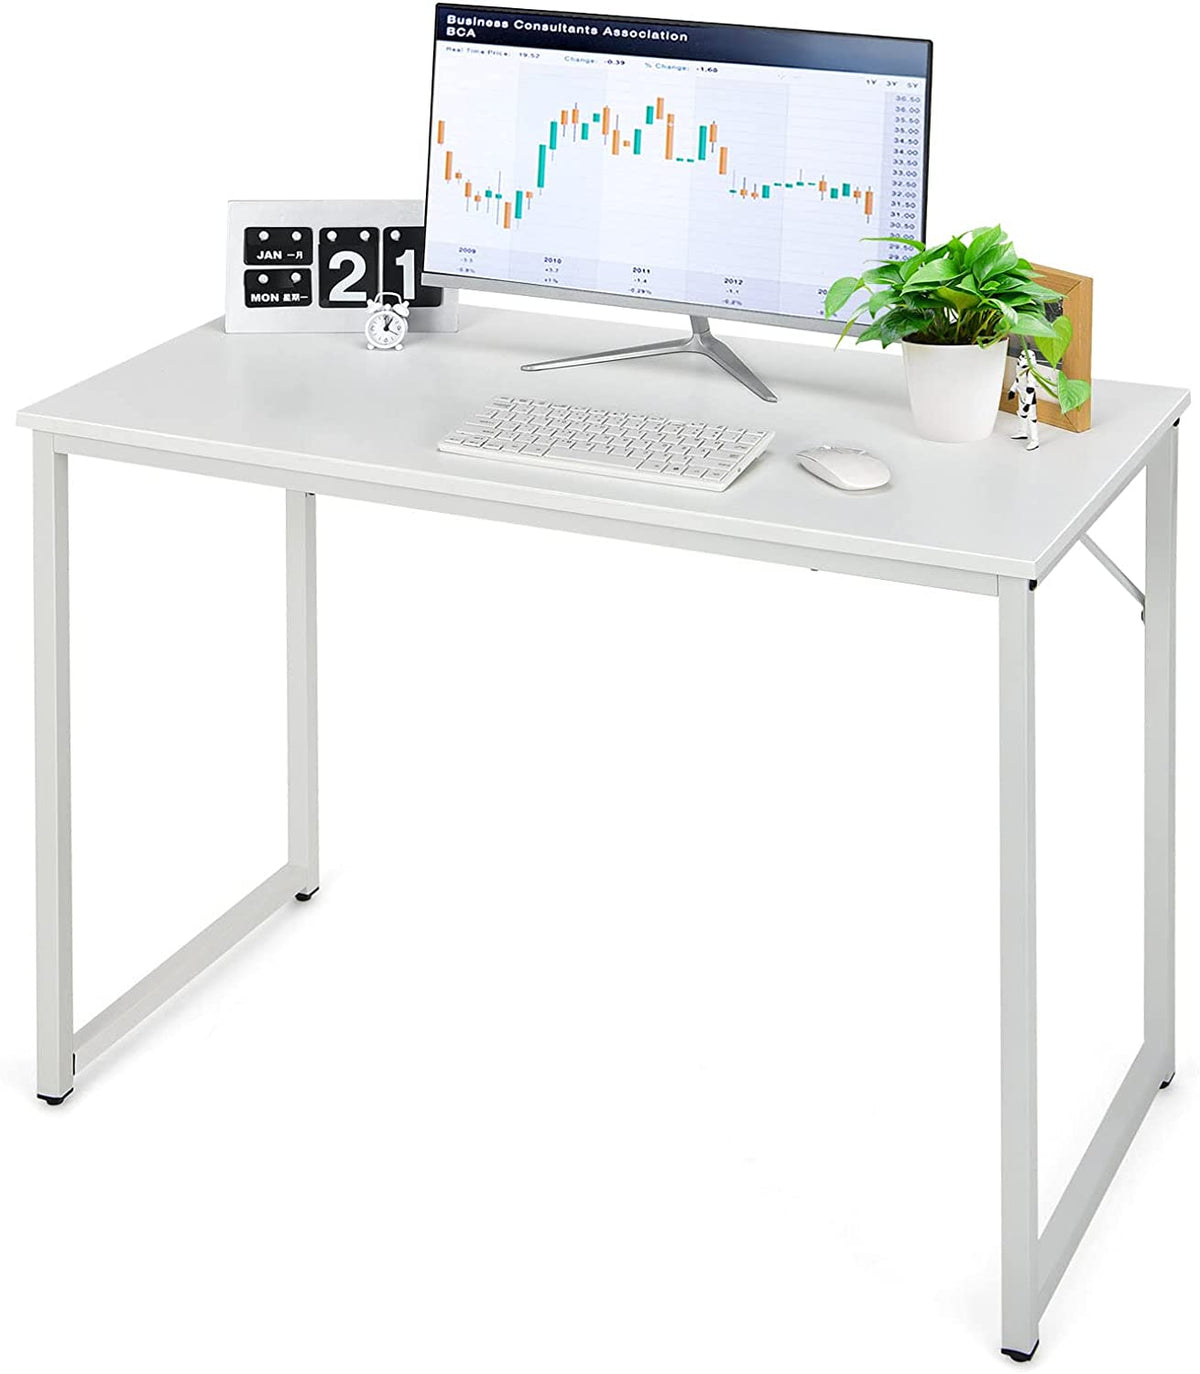 Giantex Computer Desk, 100cm Study Writing Desk w/Heavy Duty Steel Frame